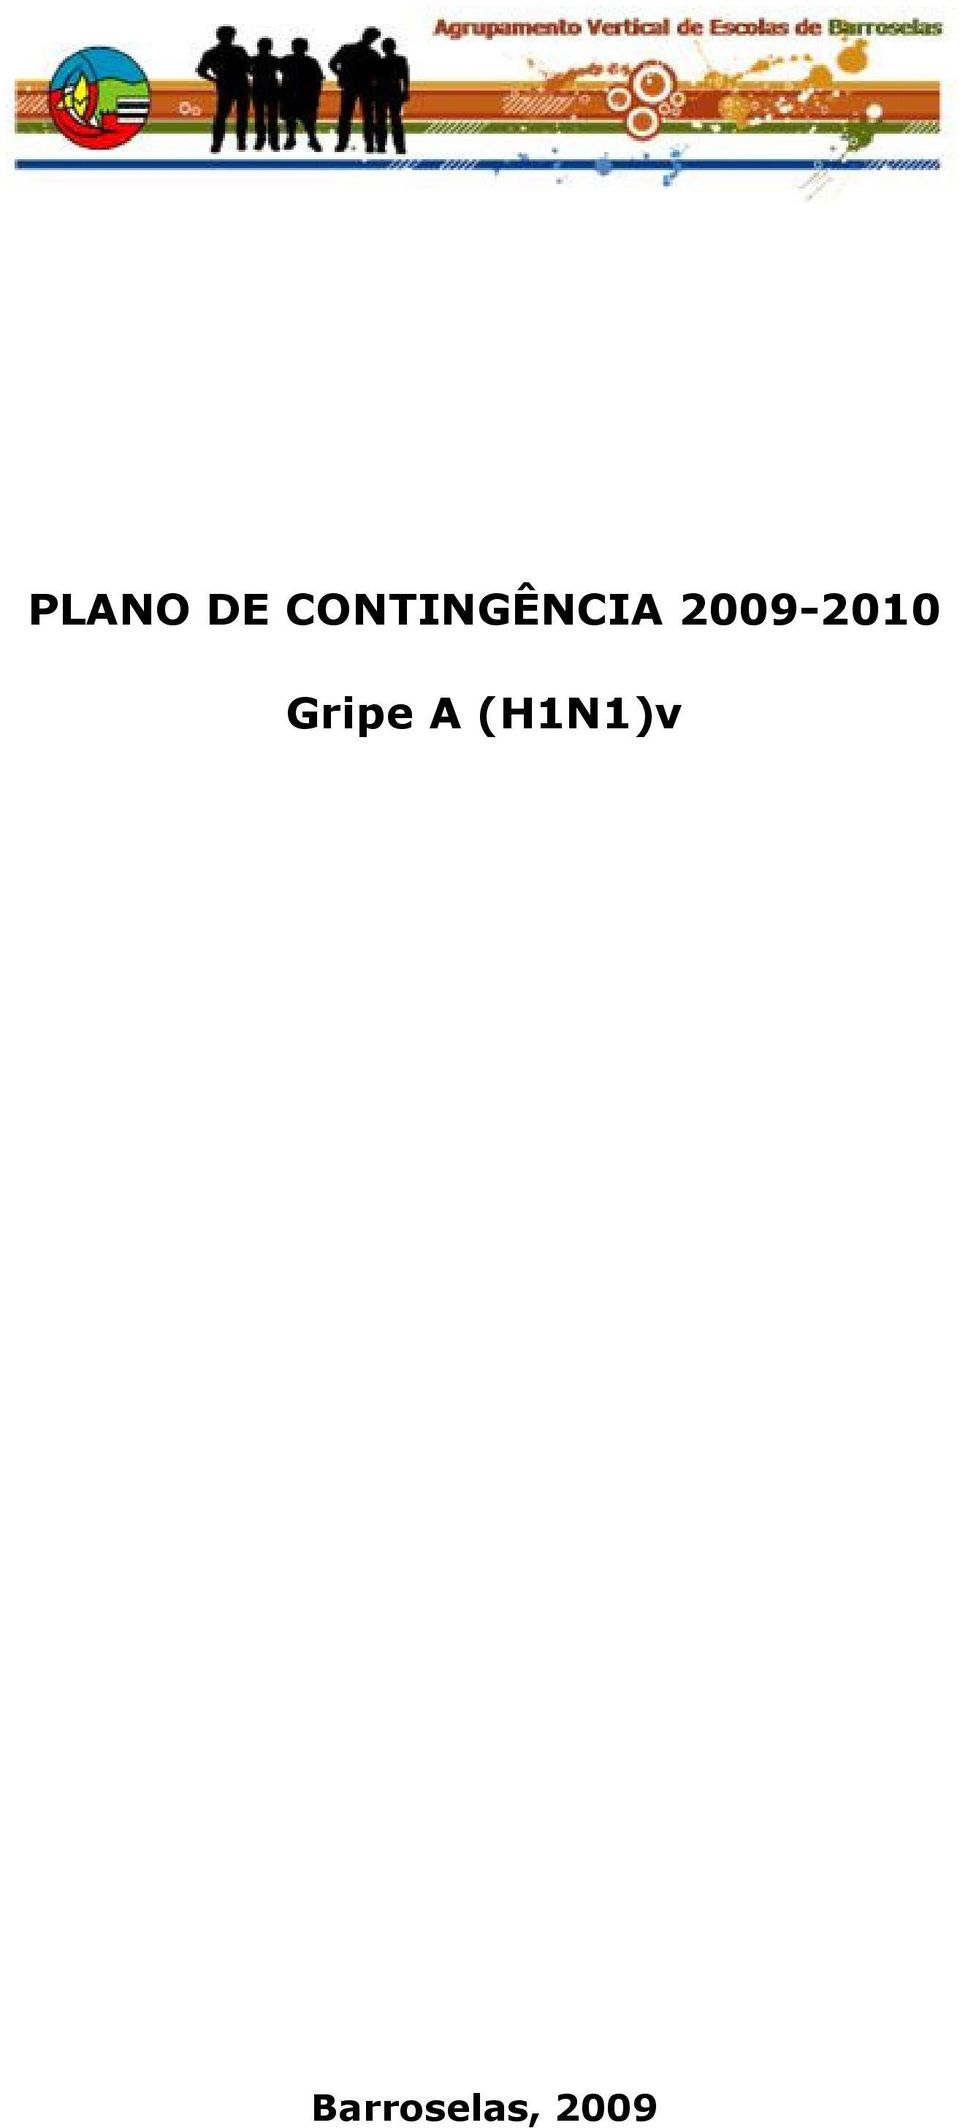 2009-2010 Gripe